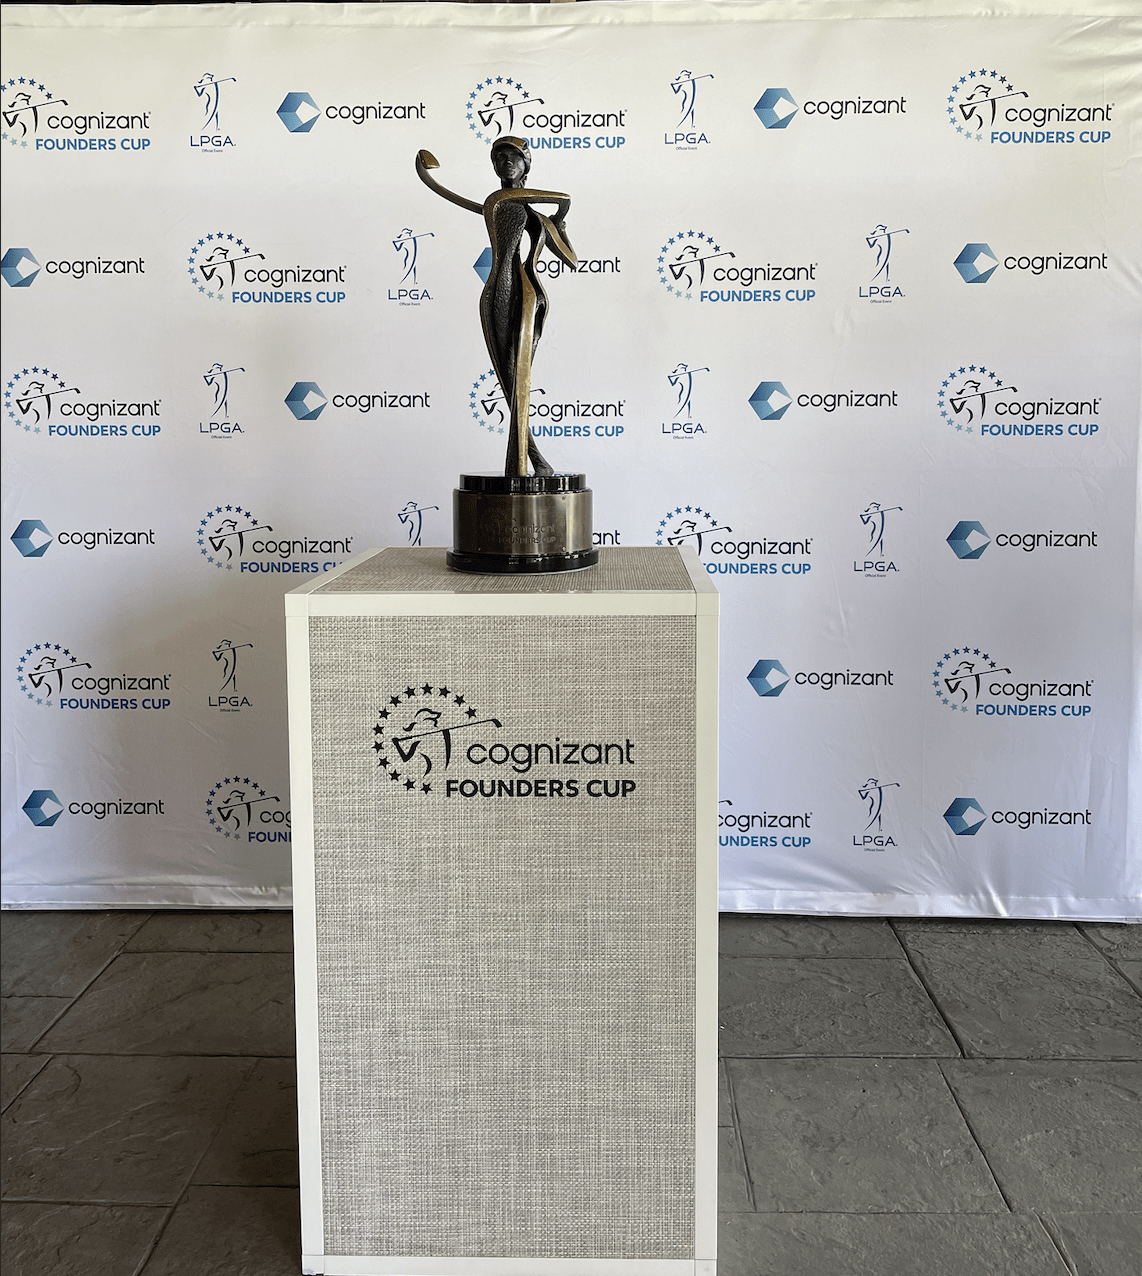 Cognizant Founder Cup trophy on pedestal